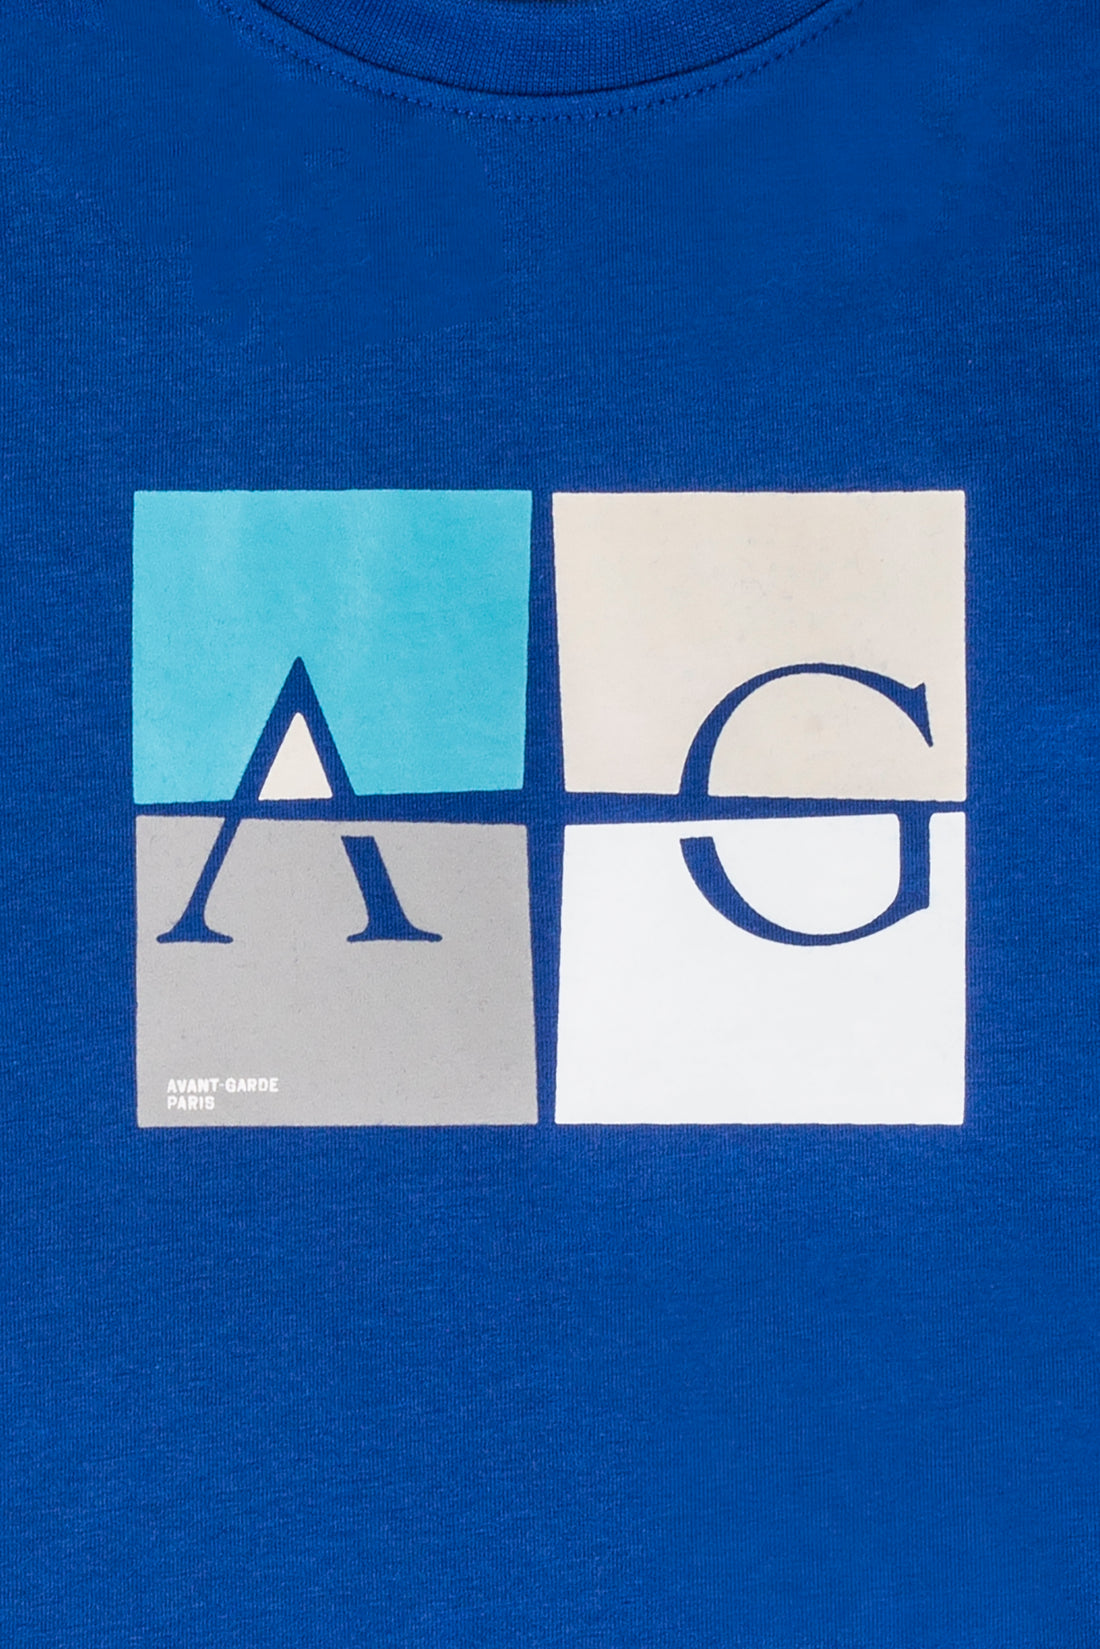 Boys Quadrant T-Shirt in Blue